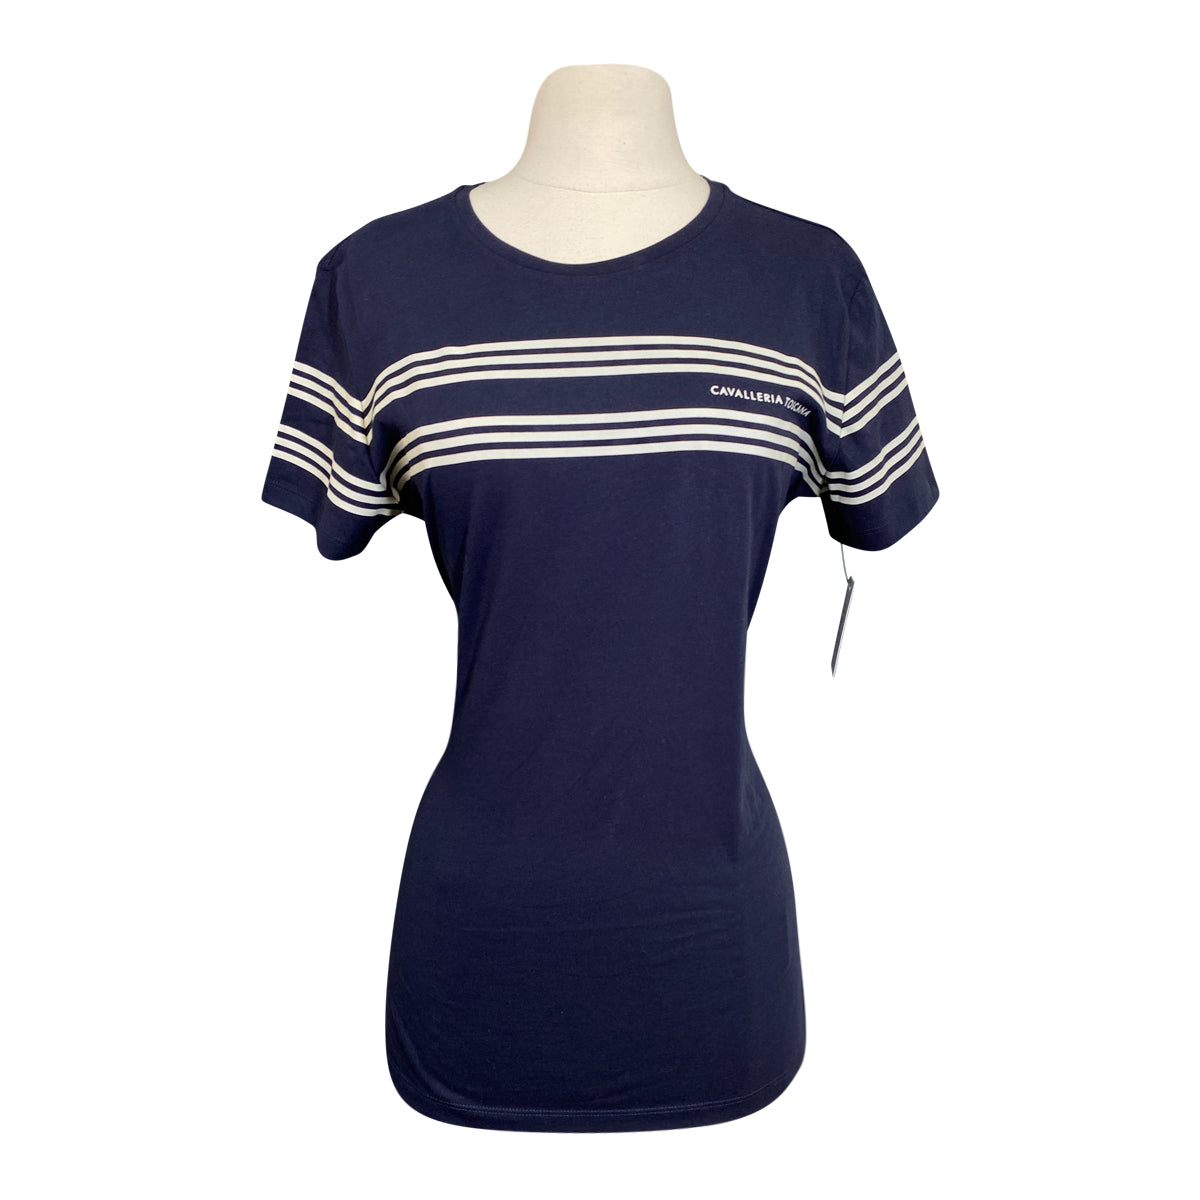 Cavalleria Toscana T-Shirt in Navy/Stripes